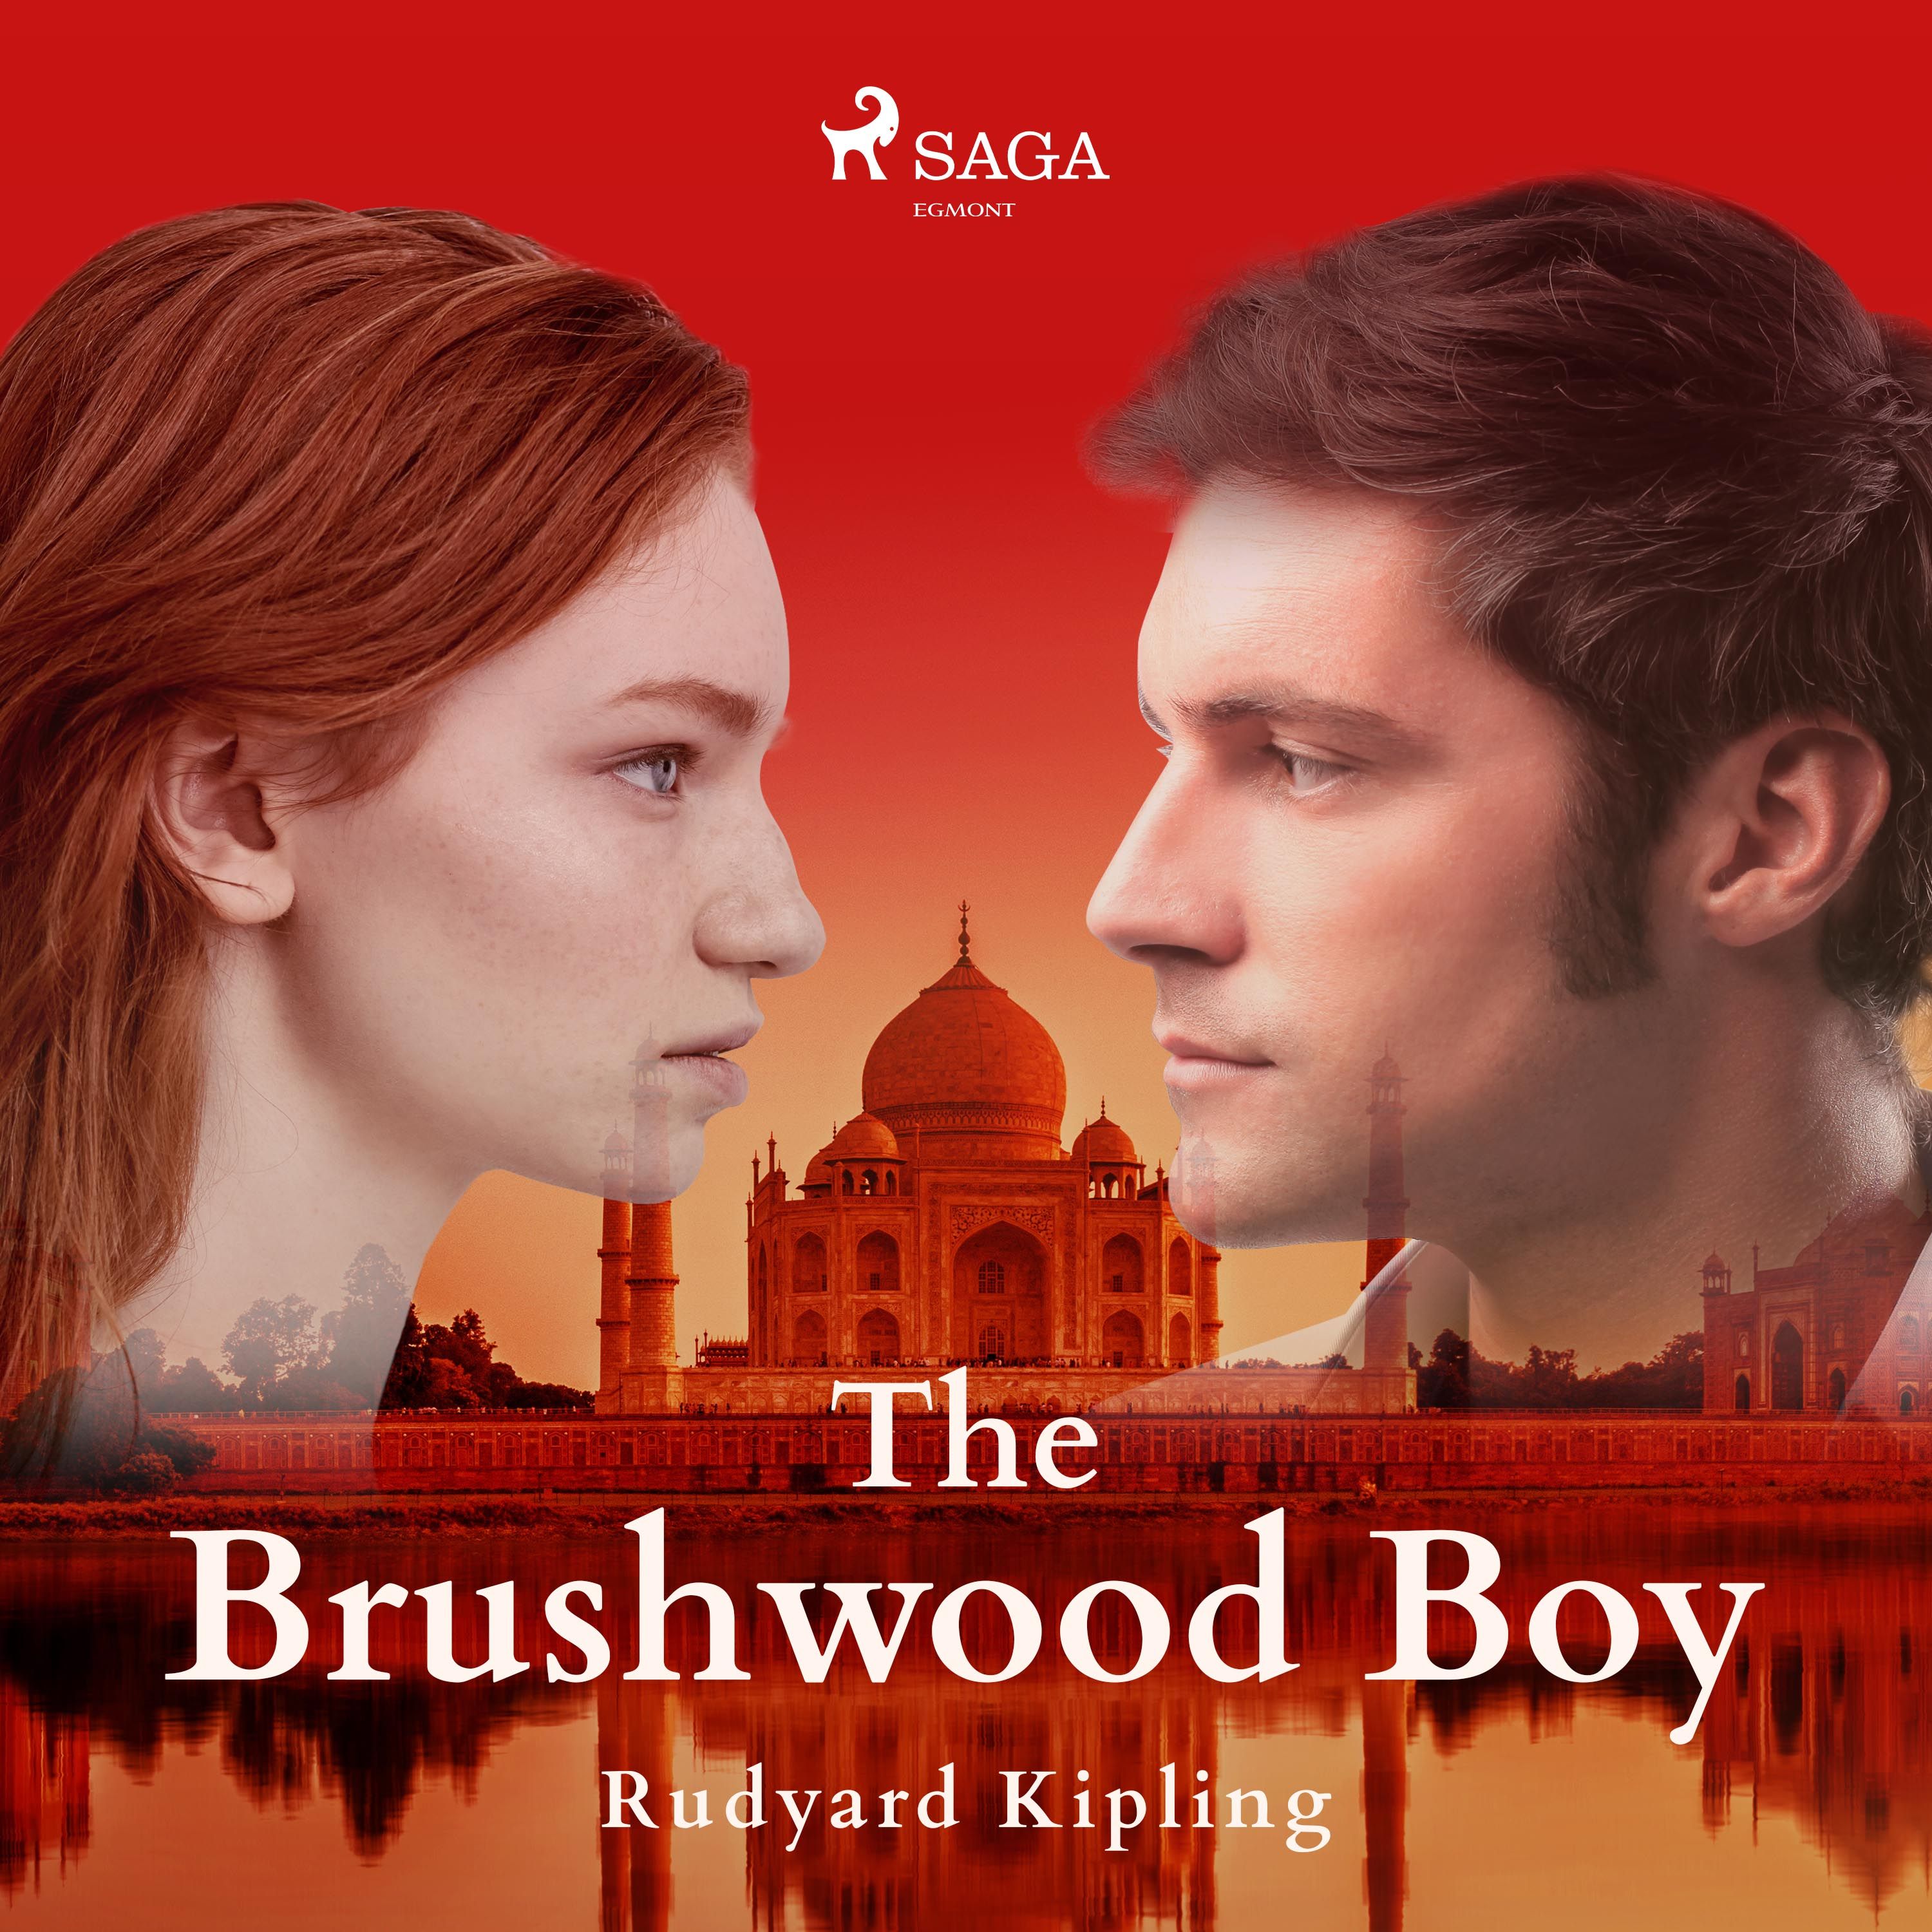 The Brushwood Boy, ljudbok av Rudyard Kipling